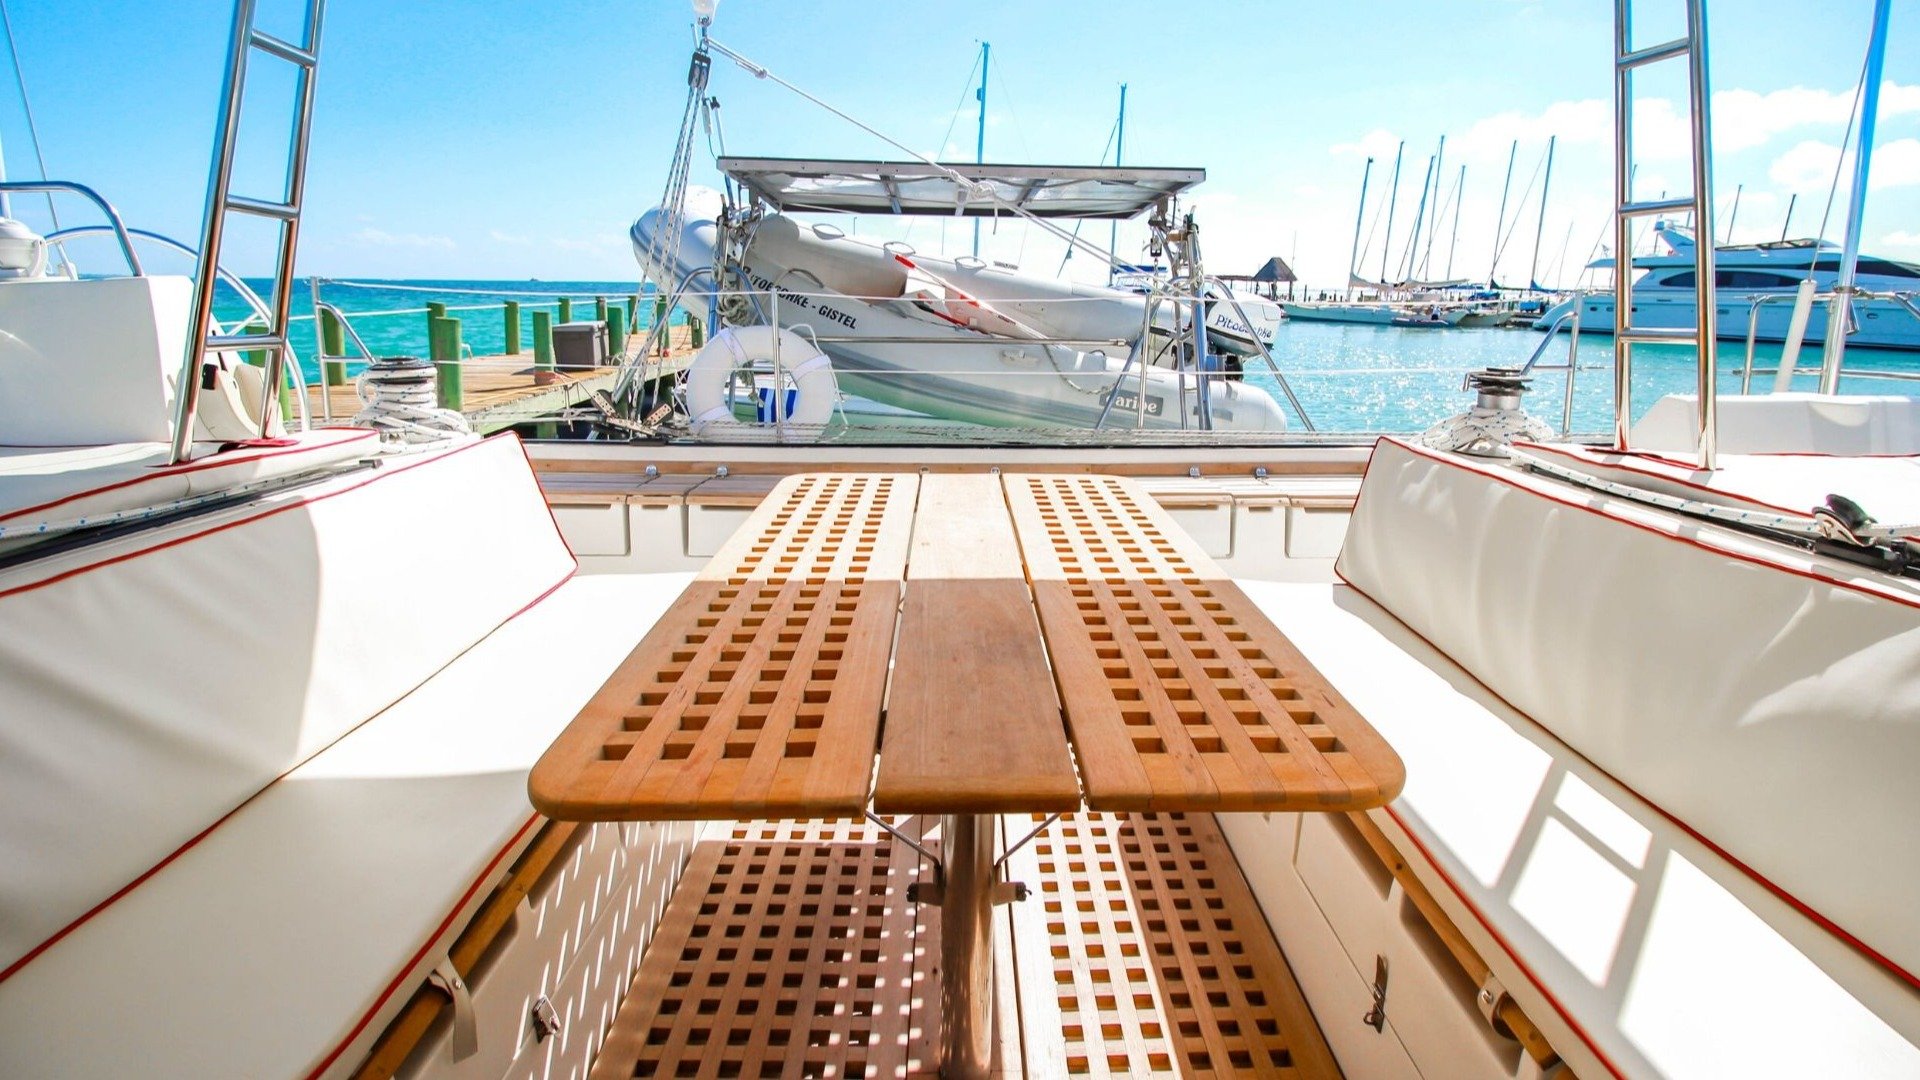 1 - LowRes - Max - Private tour to Isla Mujeres in catamaran - Cancun Sailing